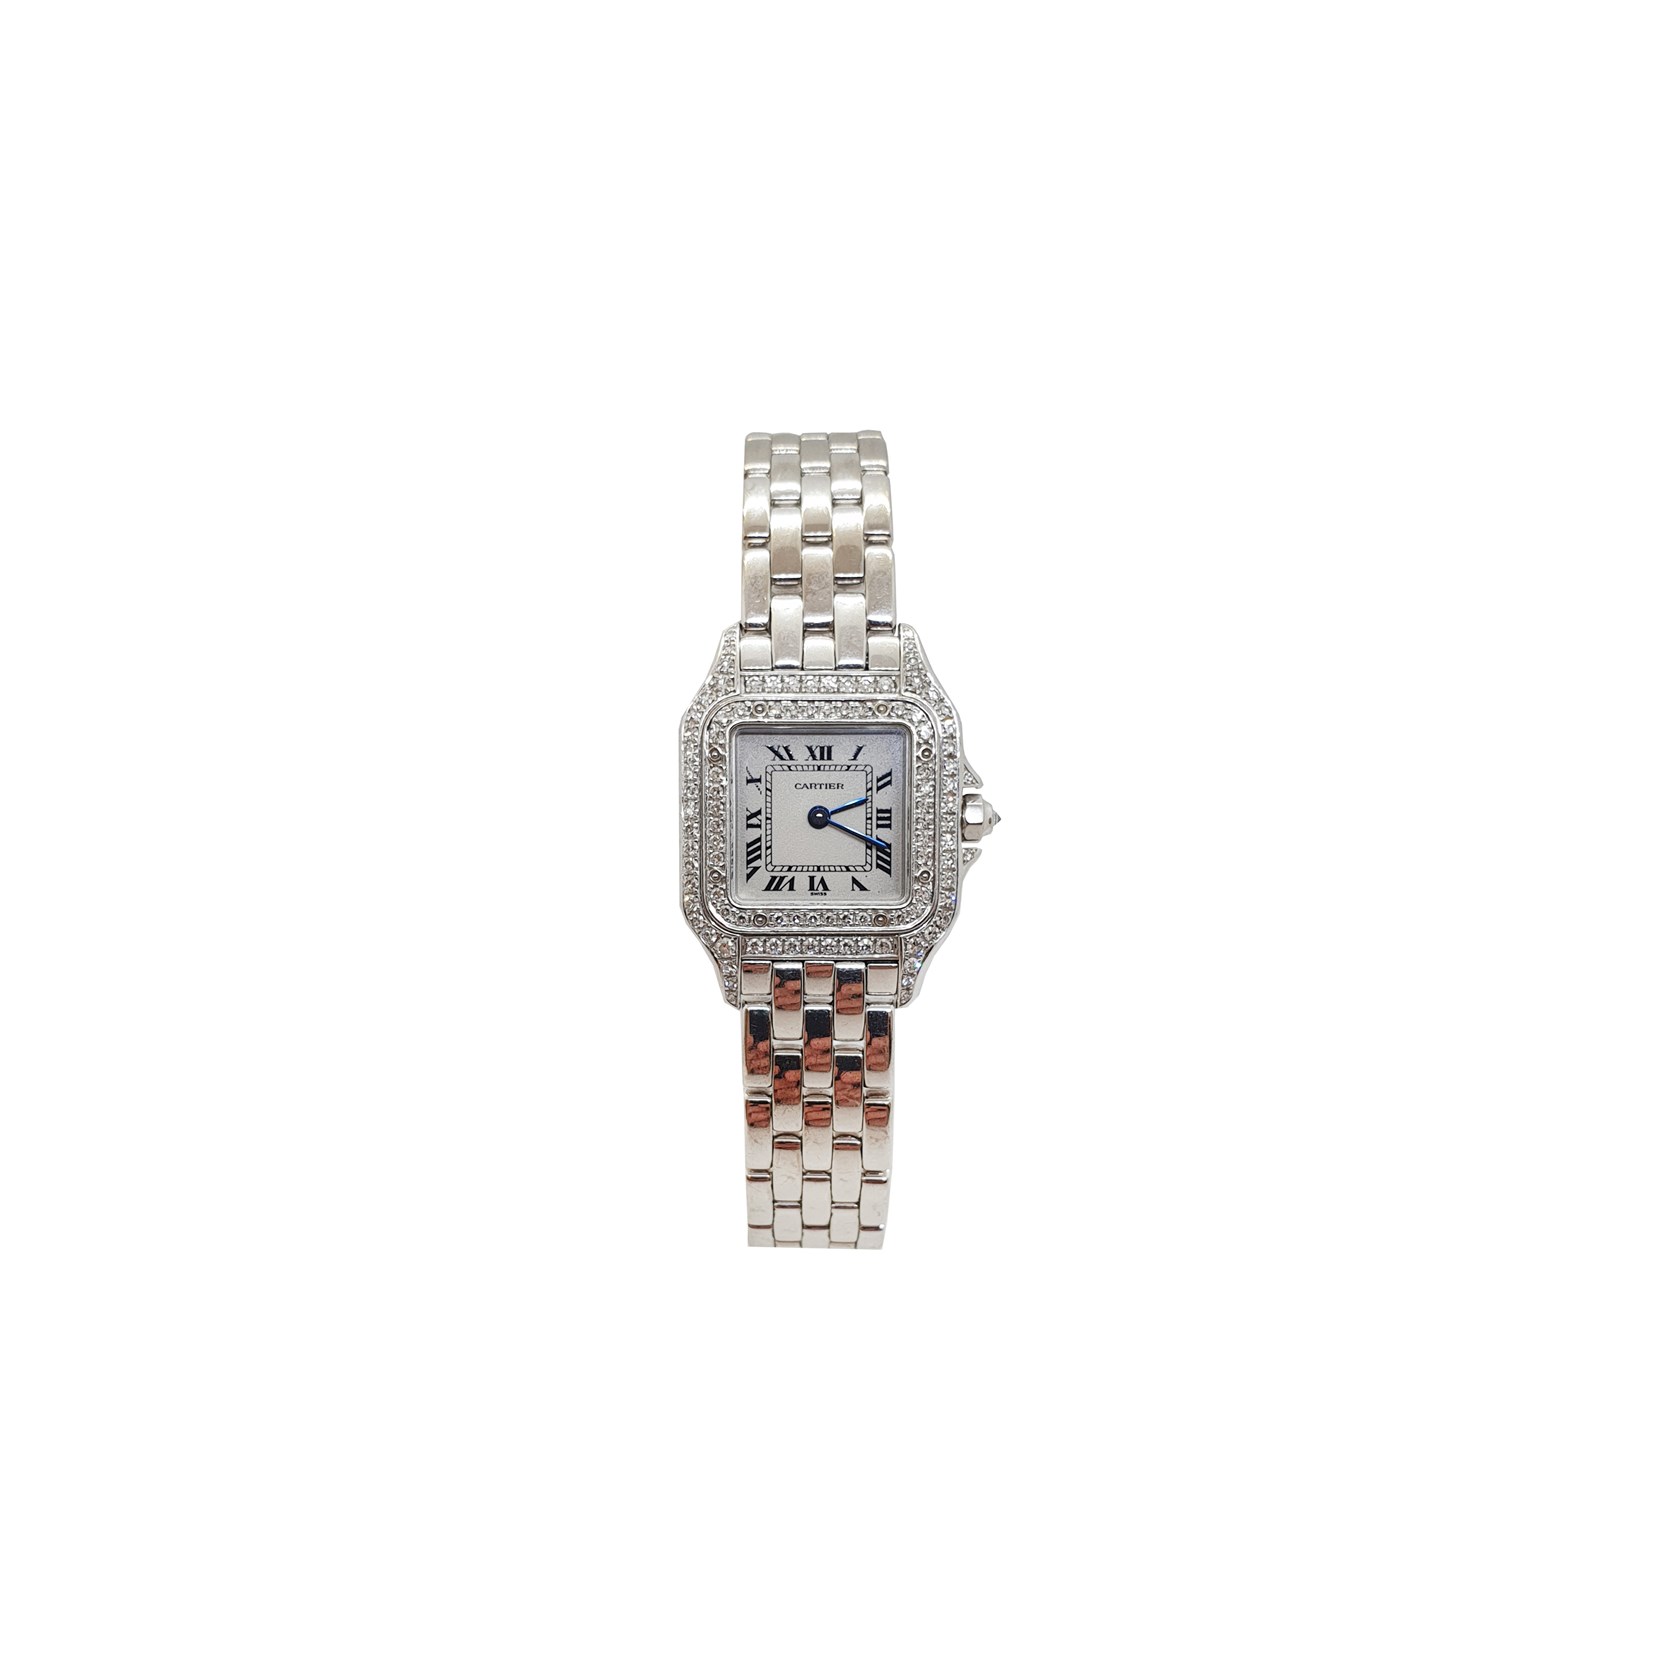 Cartier Ladies Vintage Watch - Panthere Diamond